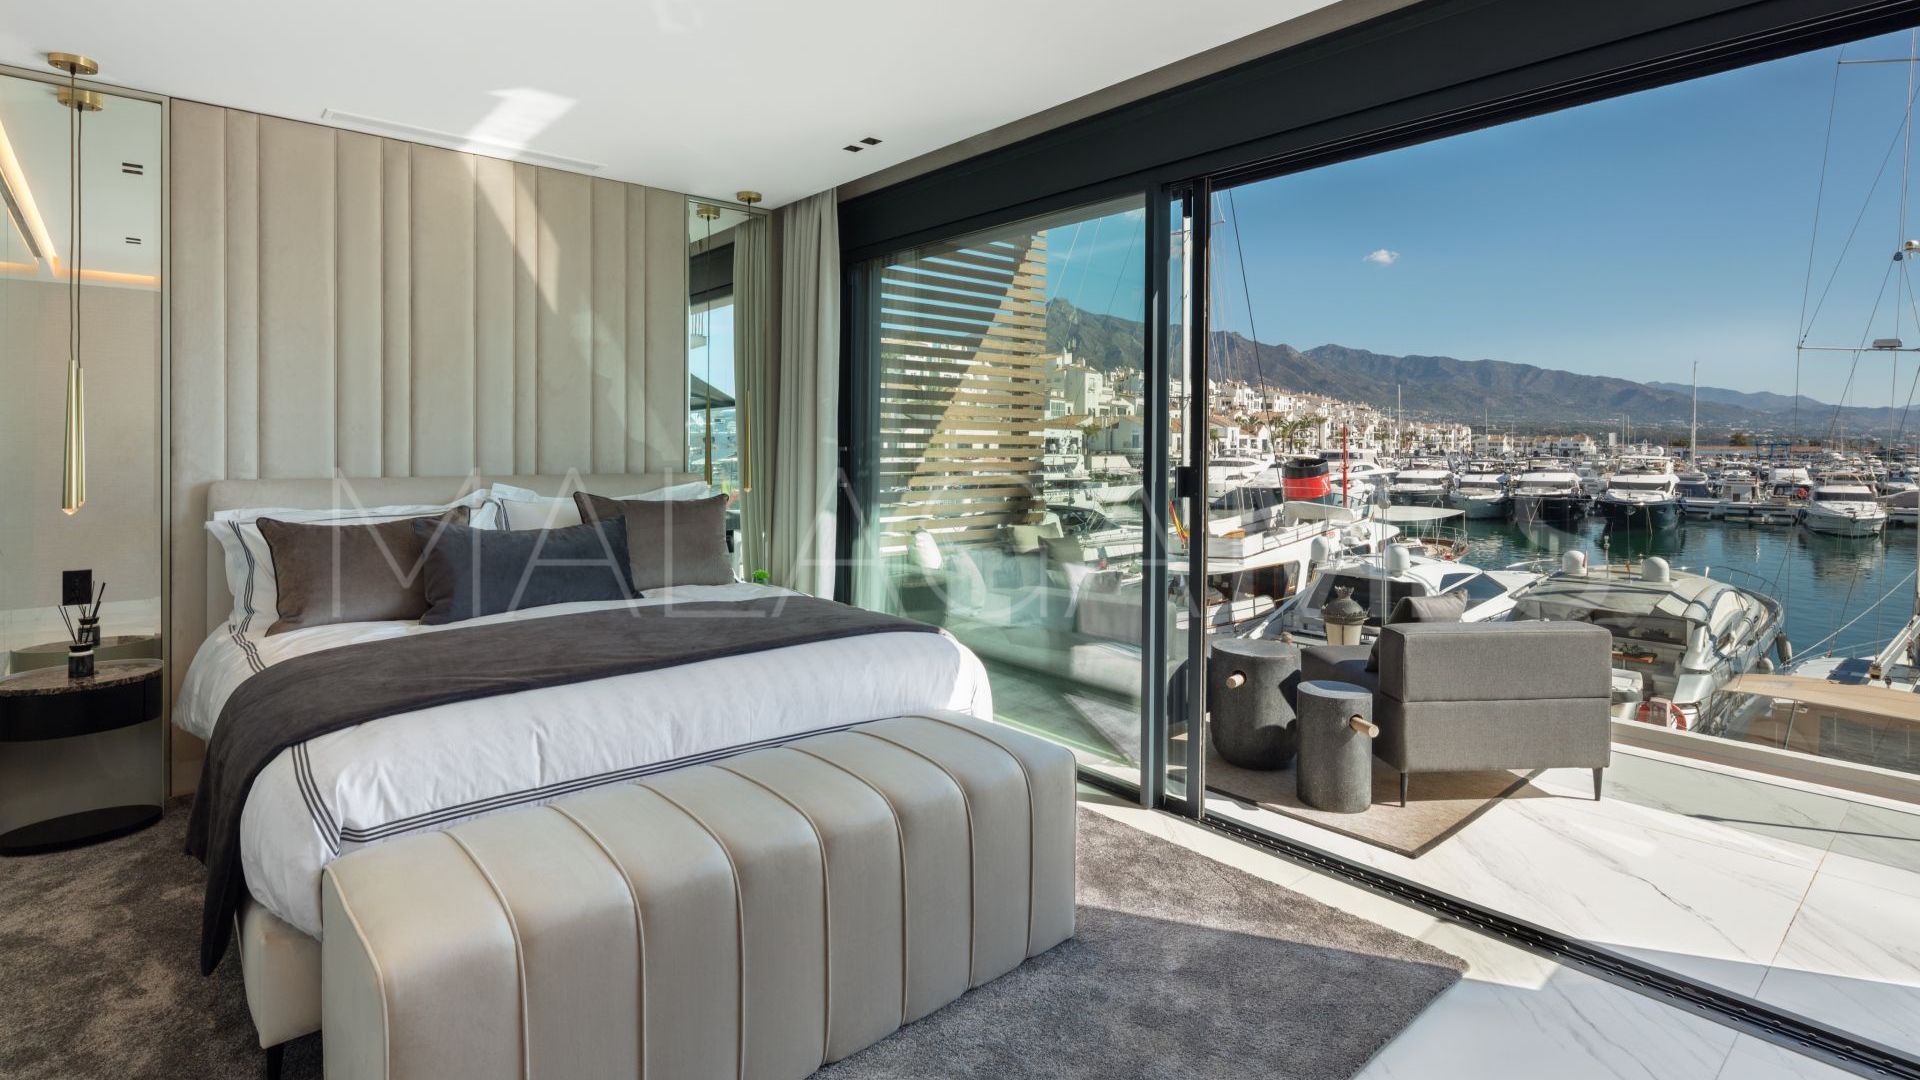 Atico for sale with 3 bedrooms in Marbella - Puerto Banus